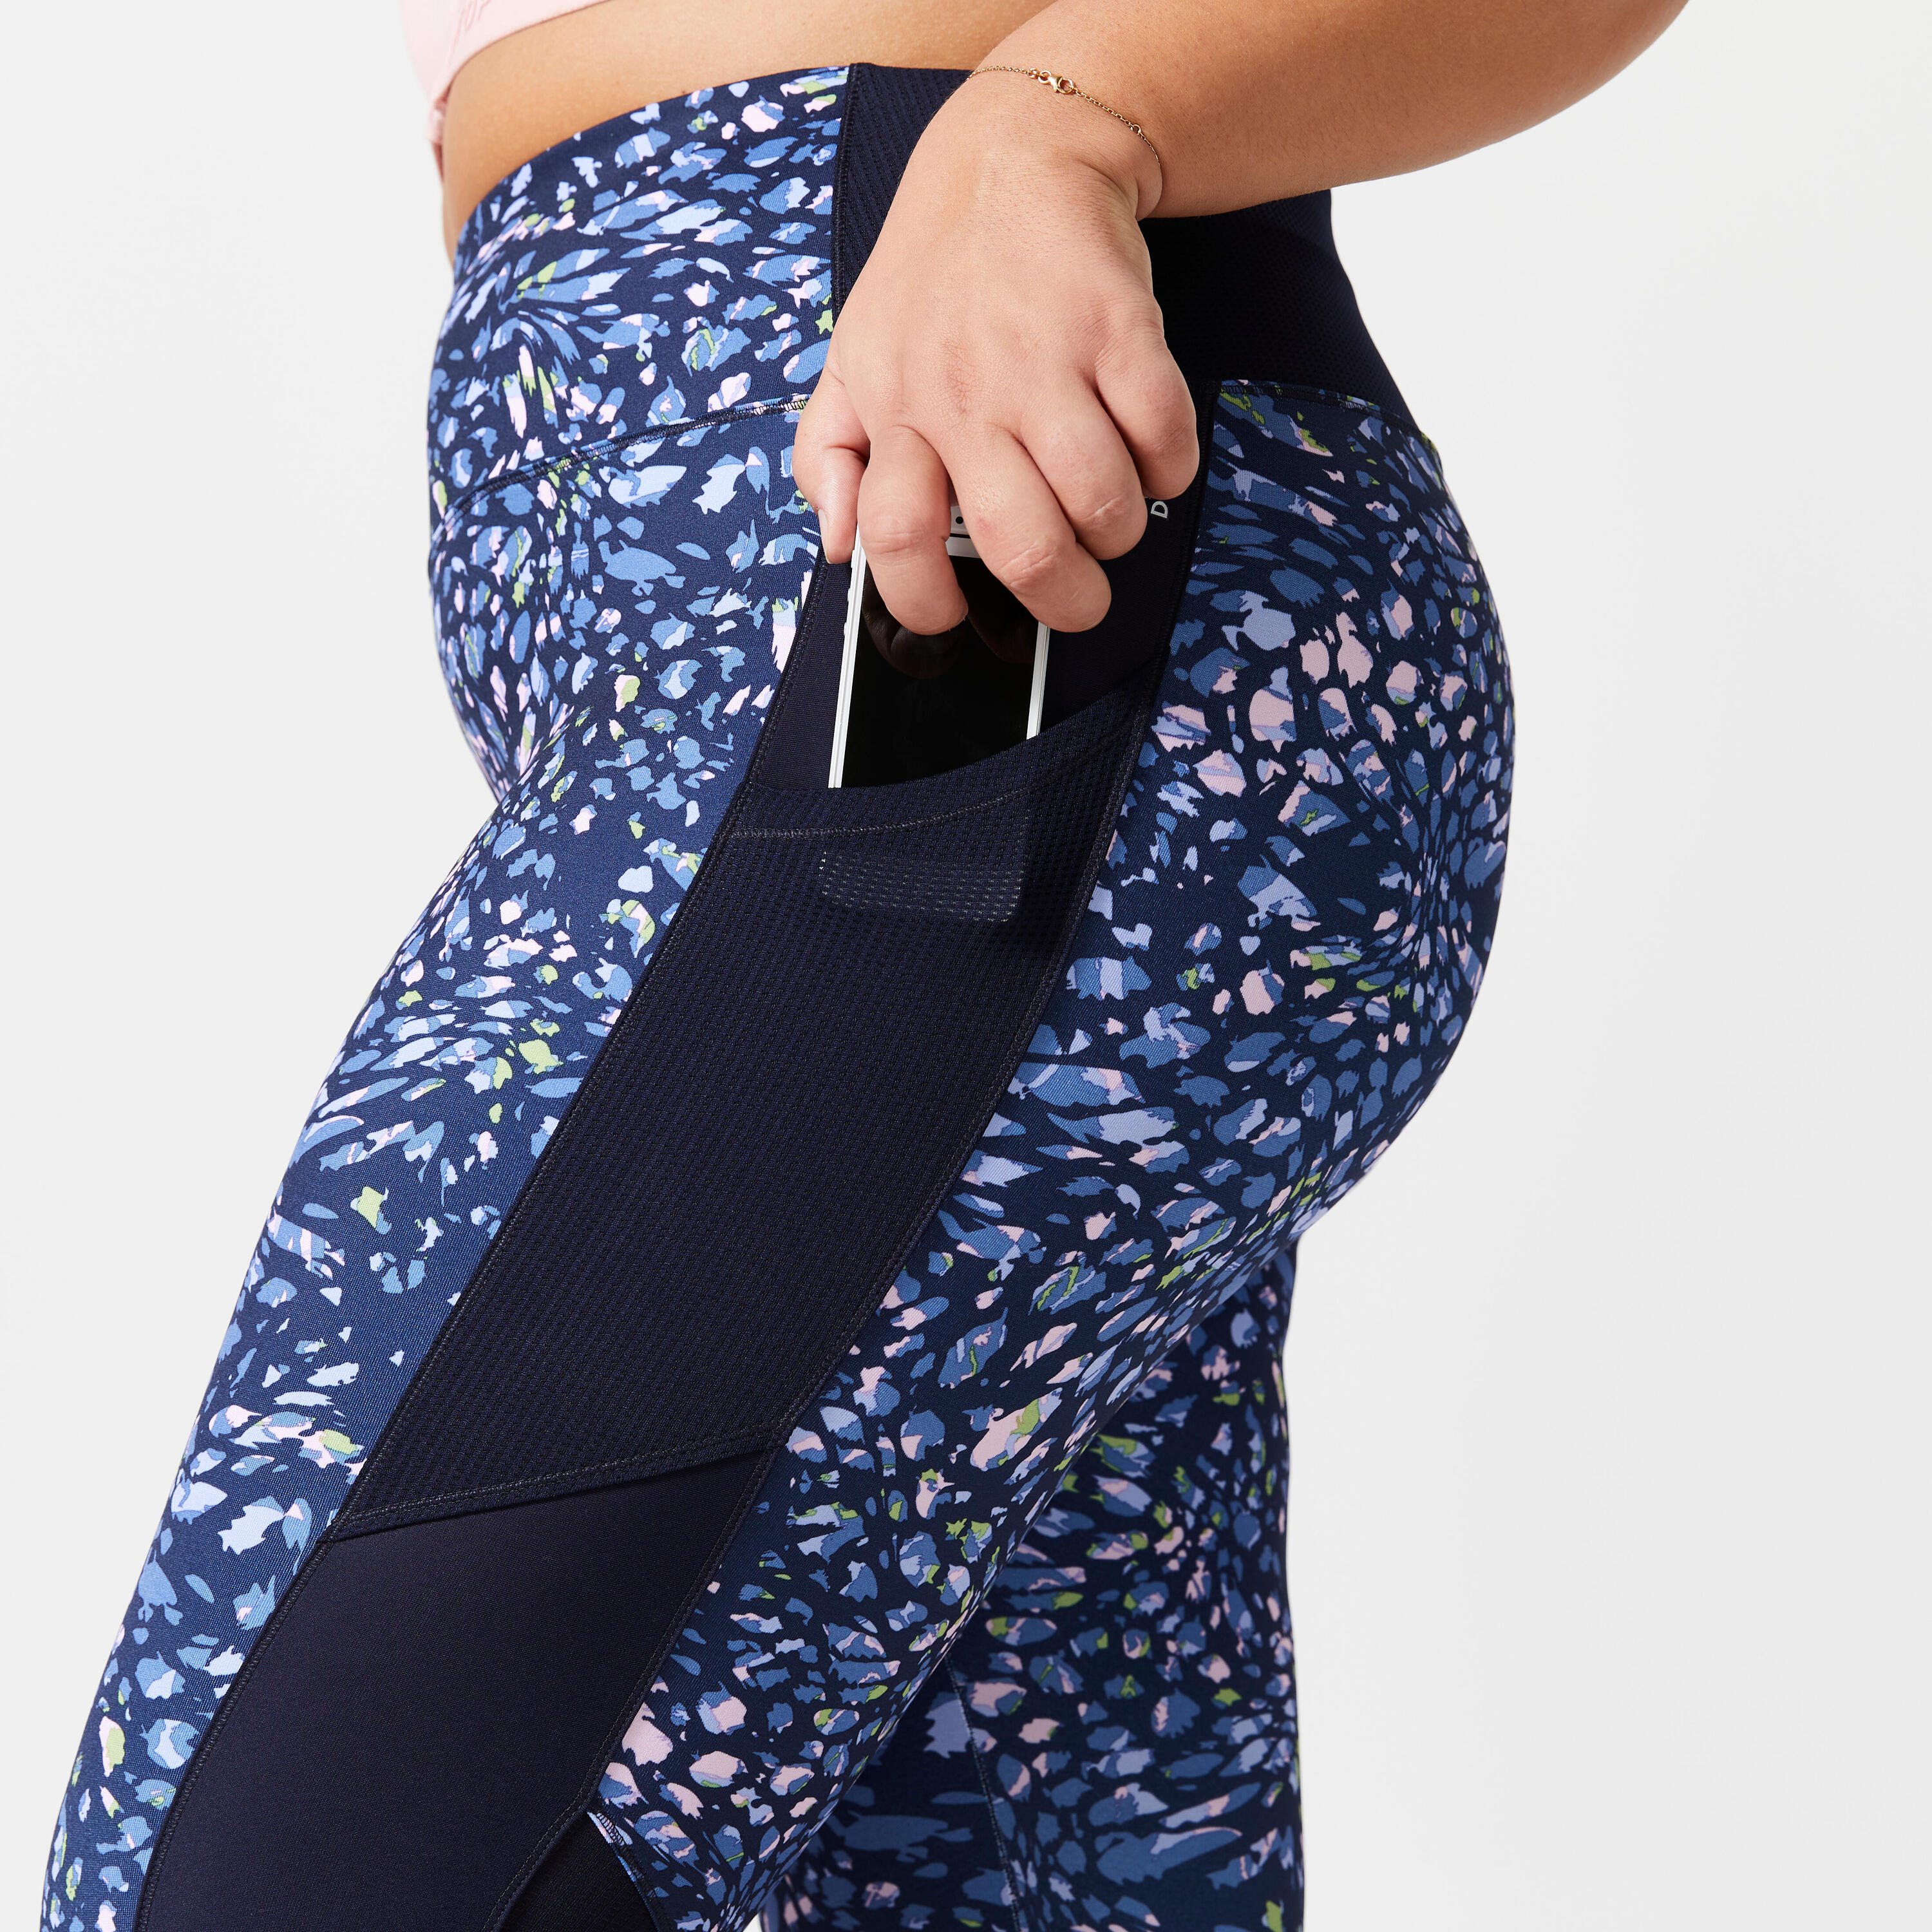 Women's Cardio Fitness Plus Size Leggings with Pocket - Blue/Print 4/5